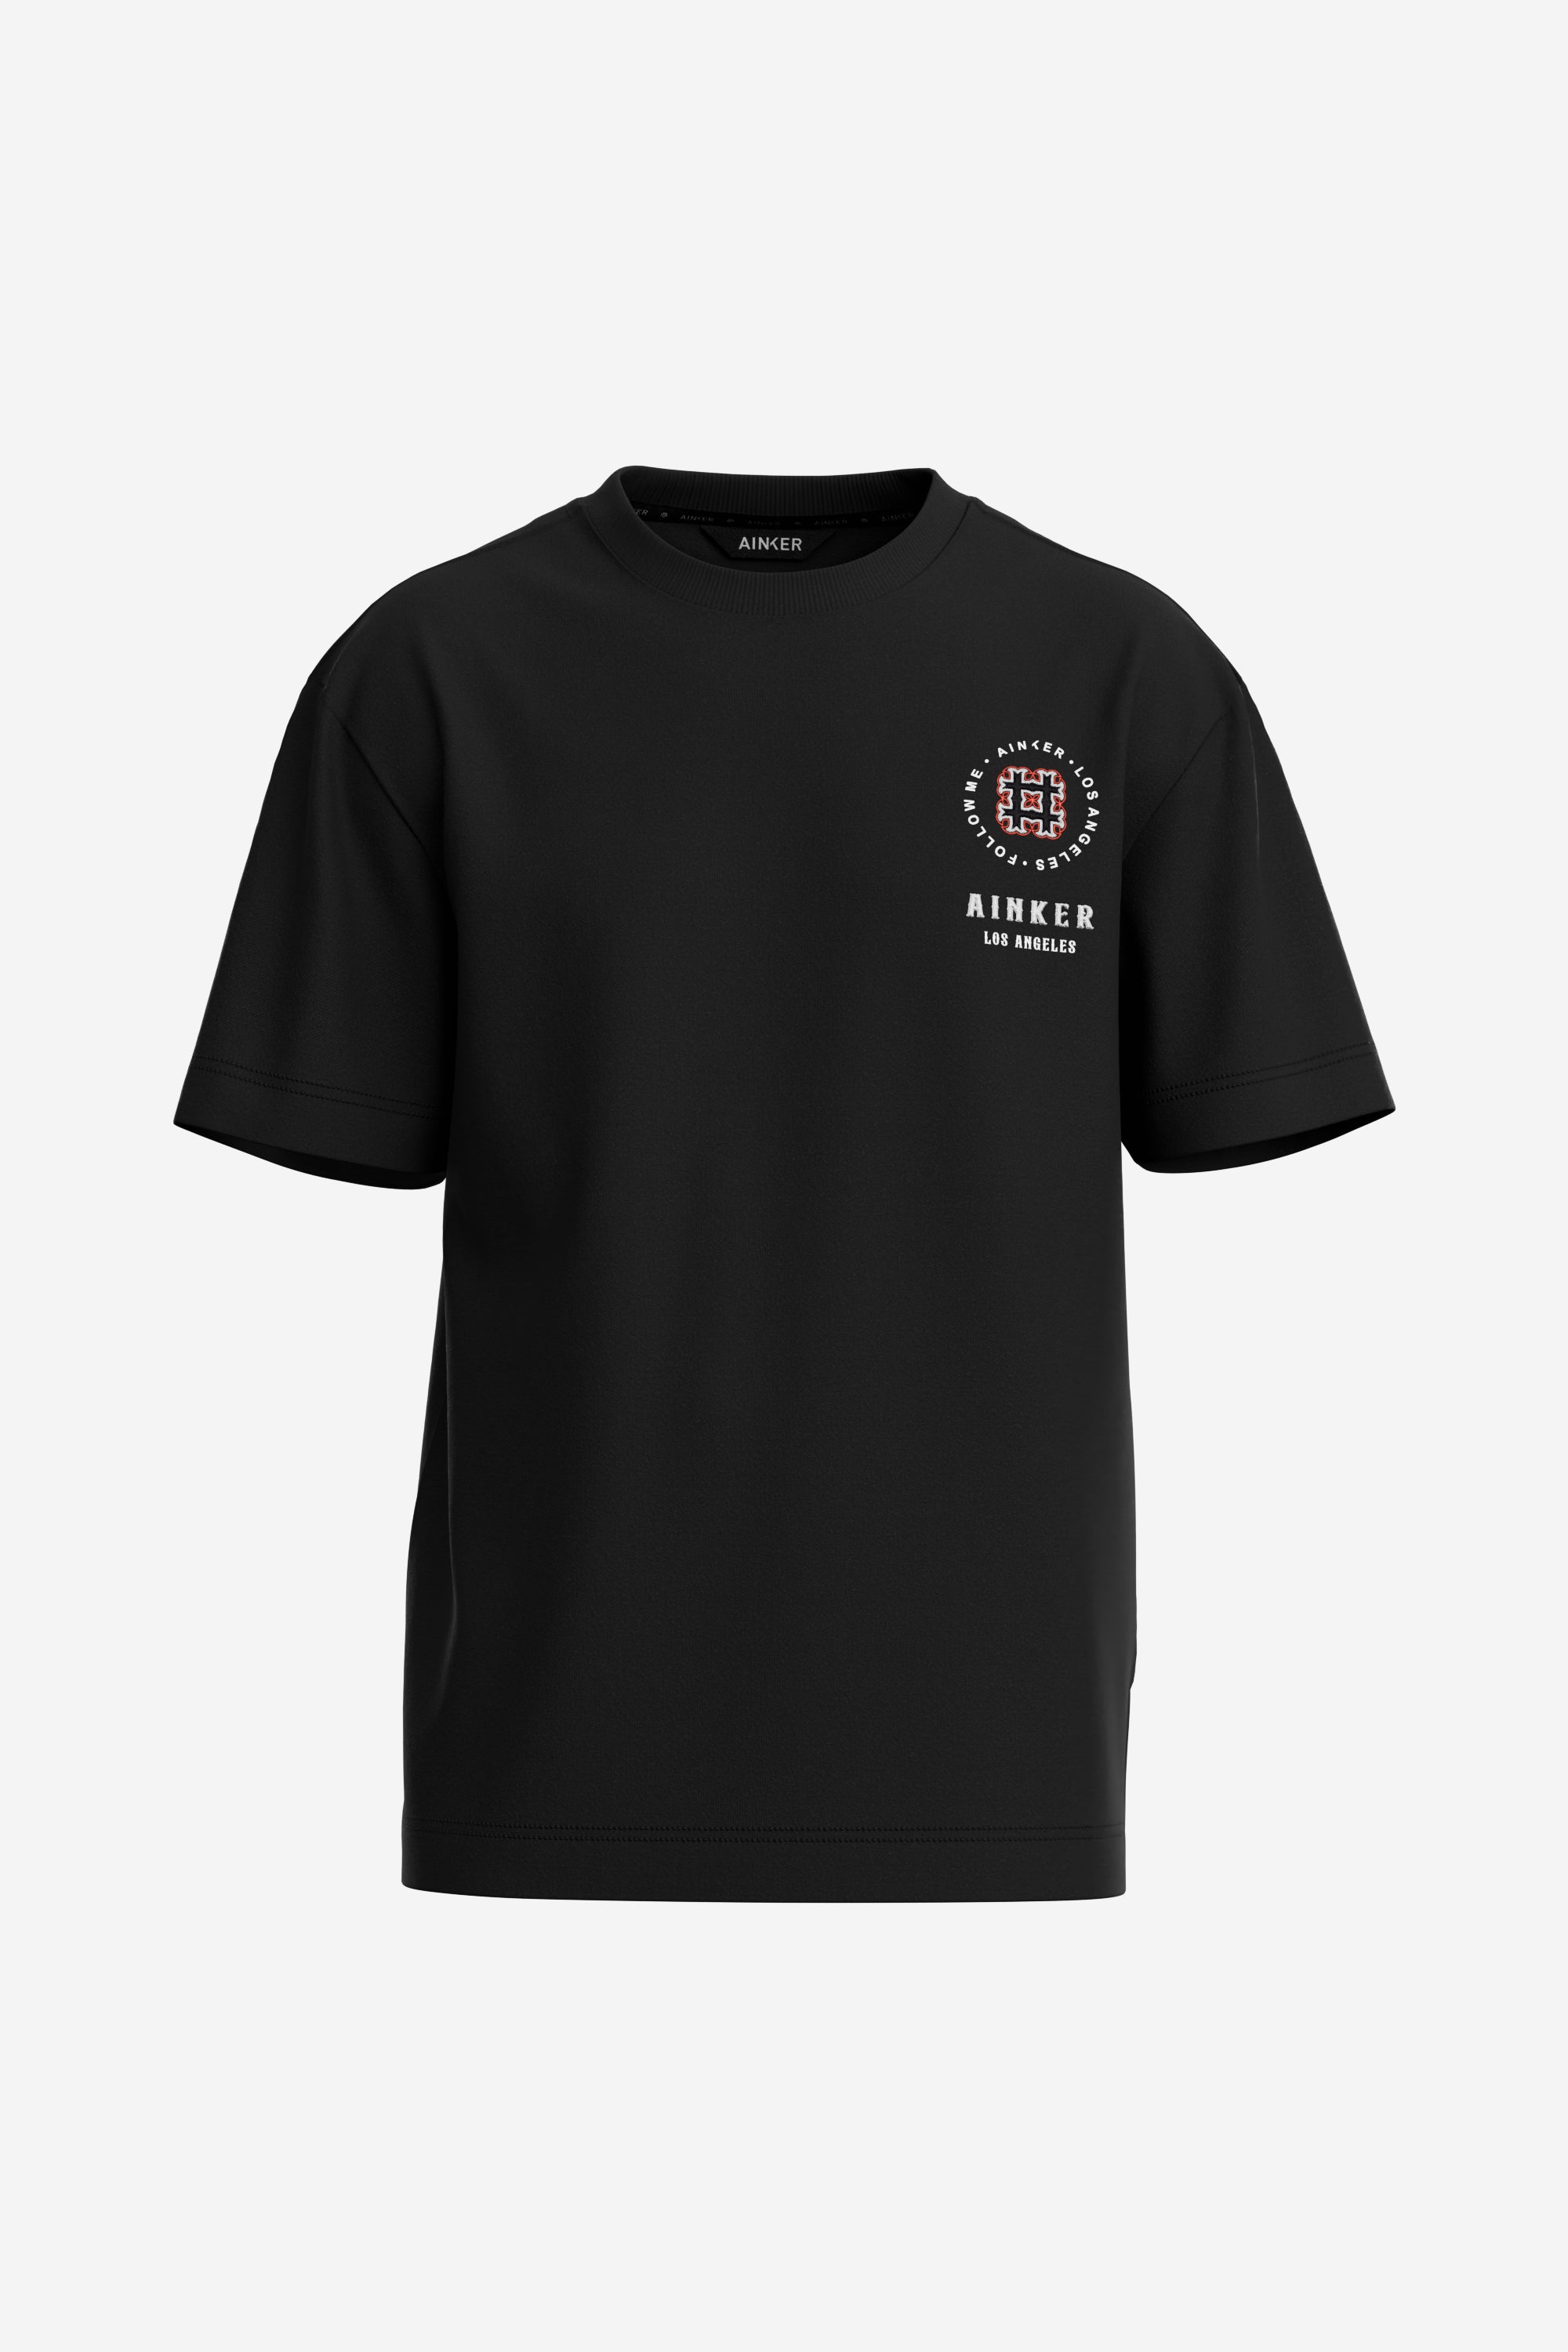 Bandana Black T-Shirt